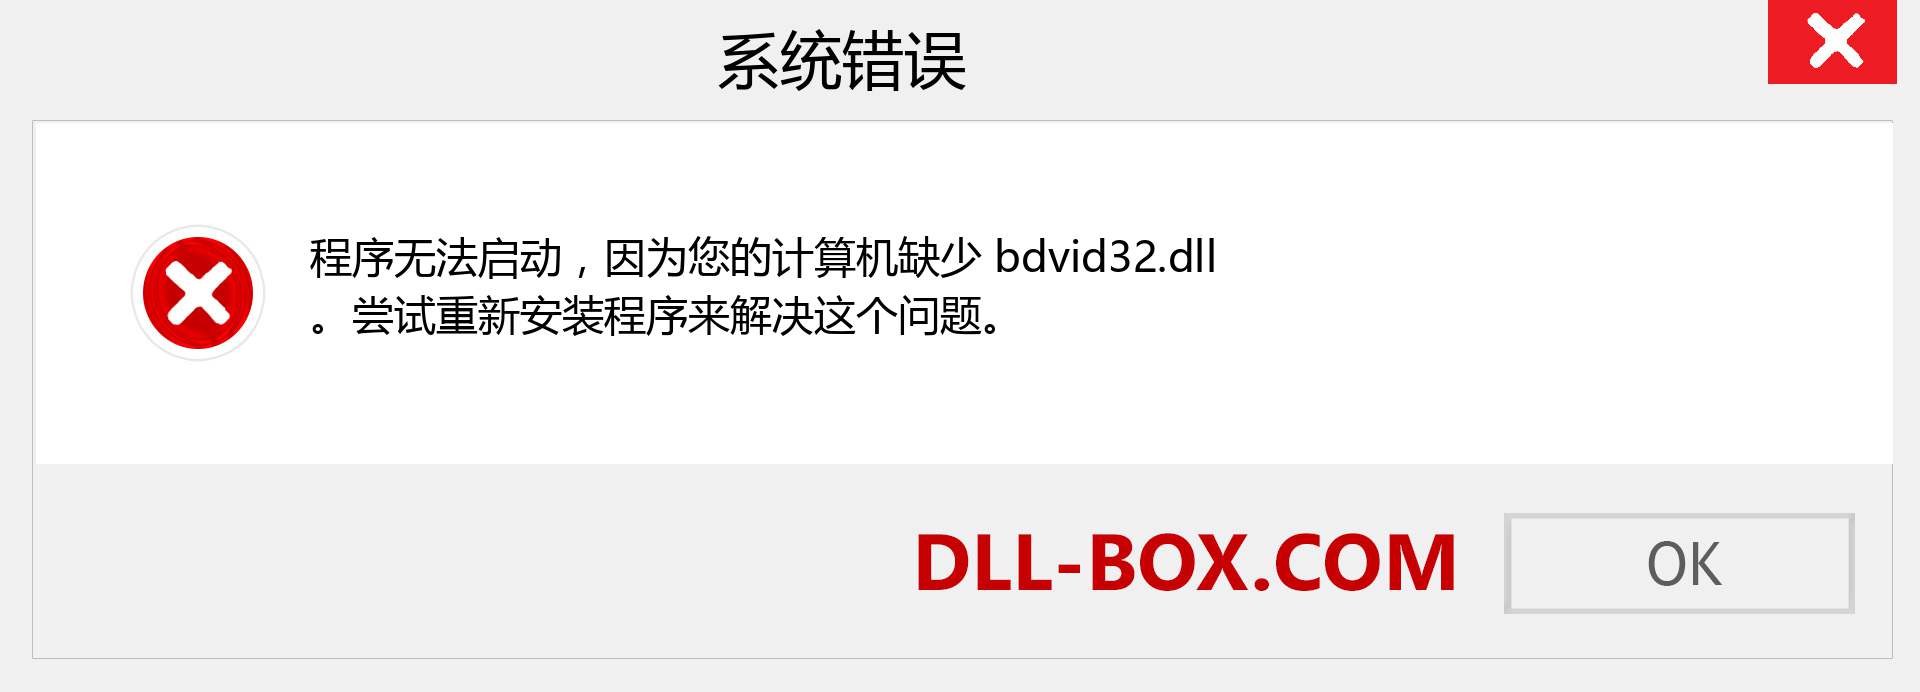 bdvid32.dll 文件丢失？。 适用于 Windows 7、8、10 的下载 - 修复 Windows、照片、图像上的 bdvid32 dll 丢失错误